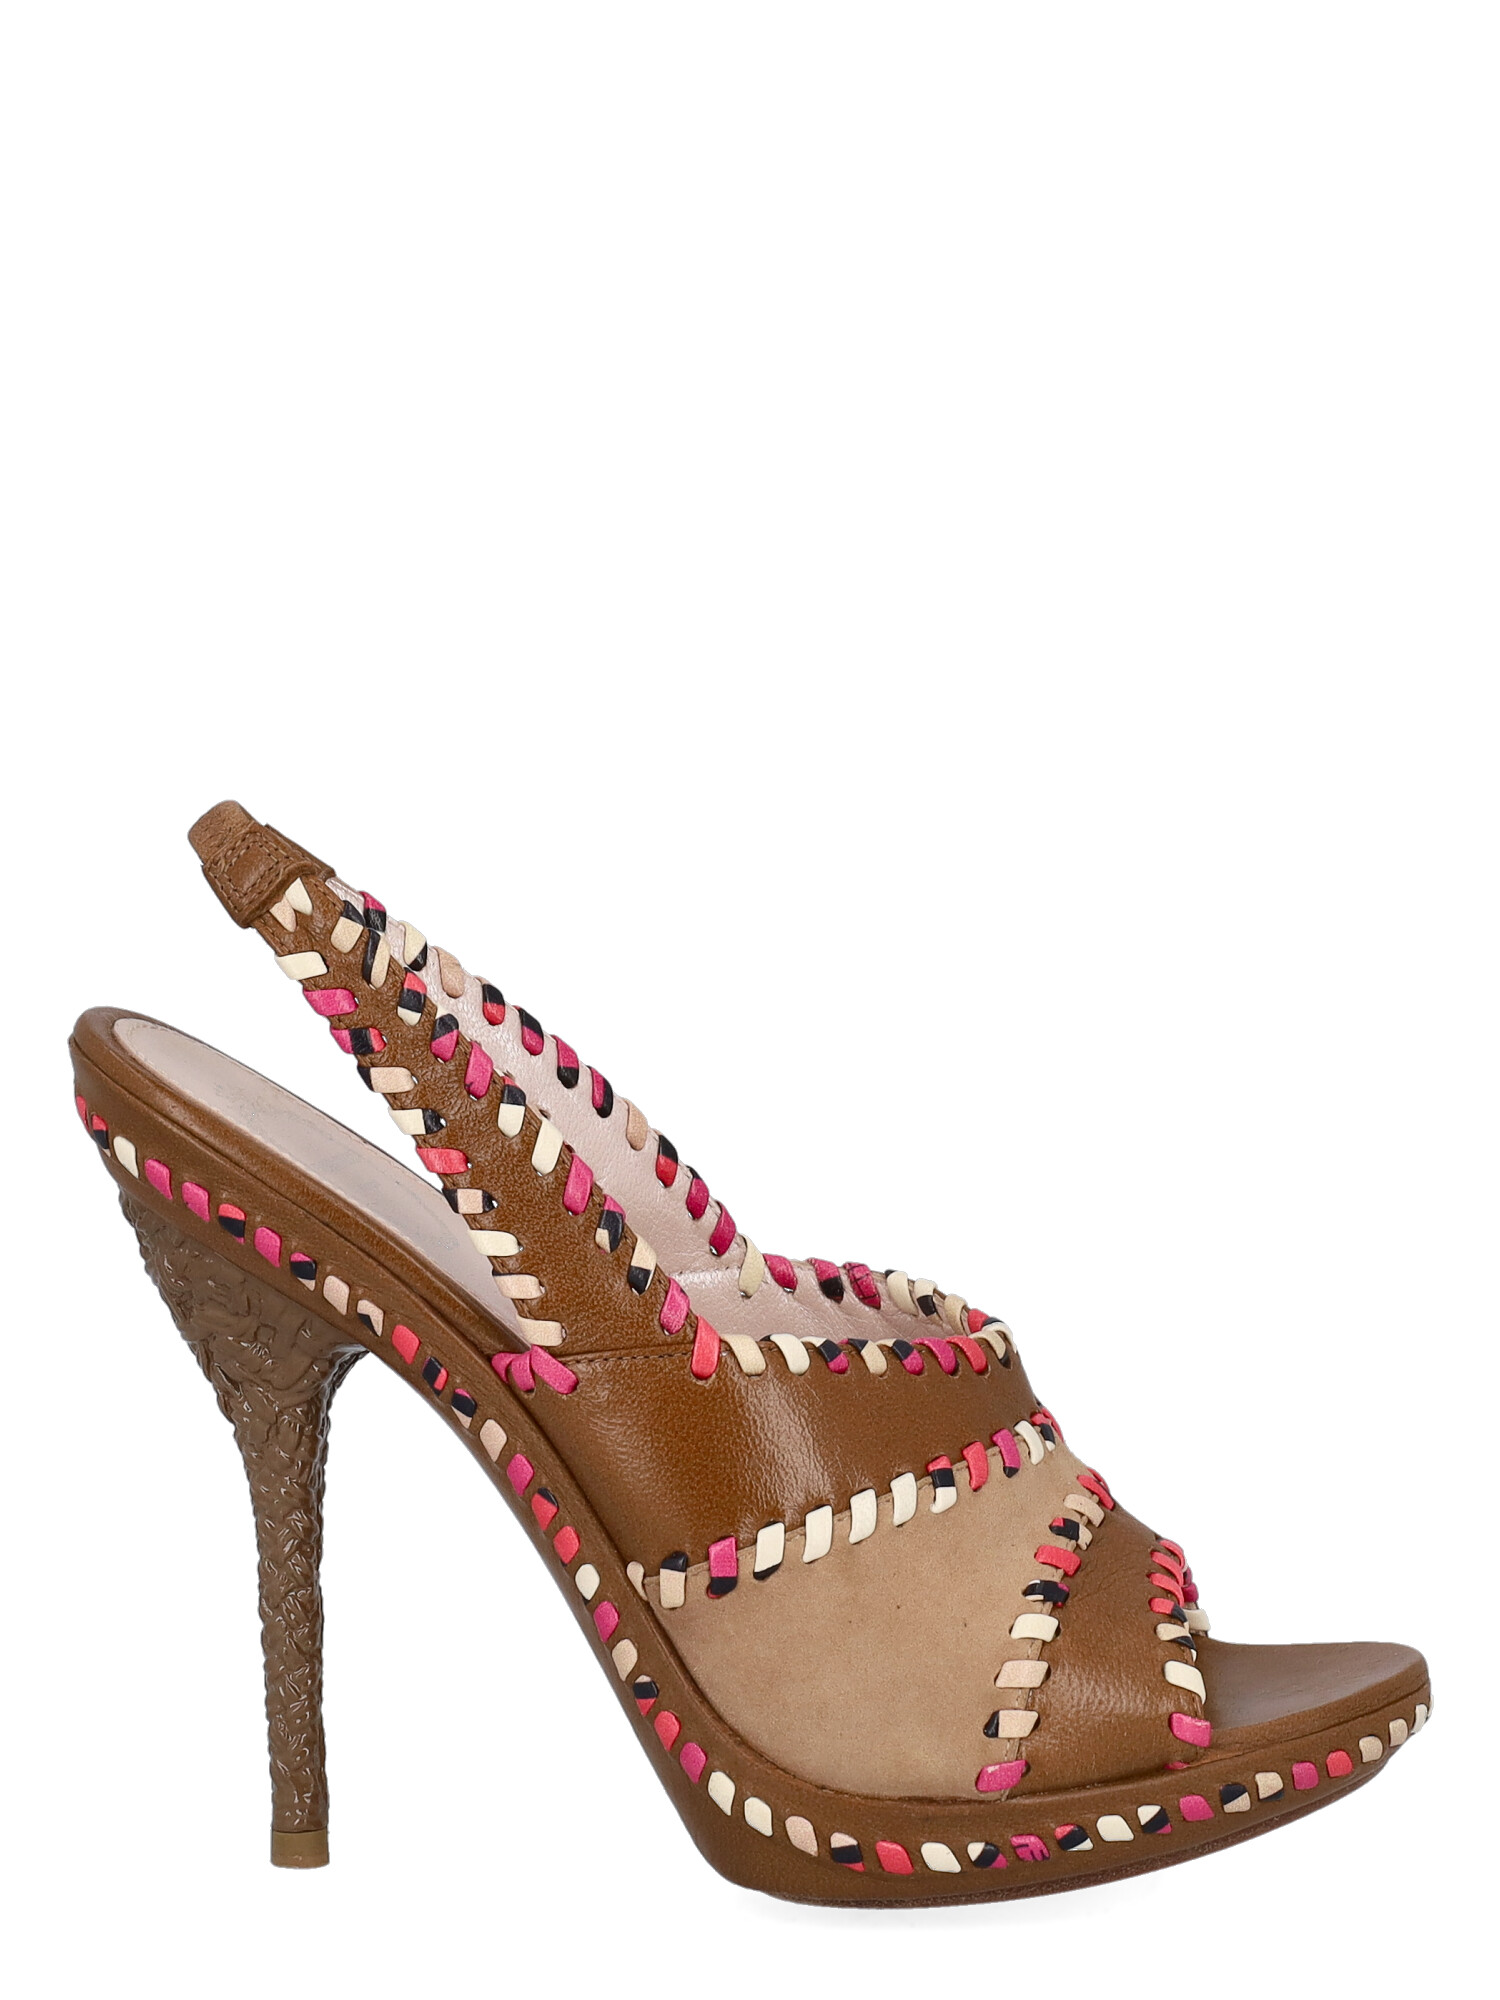 Emilio Pucci Femme Sandales Beige, Brown, Pink Leather